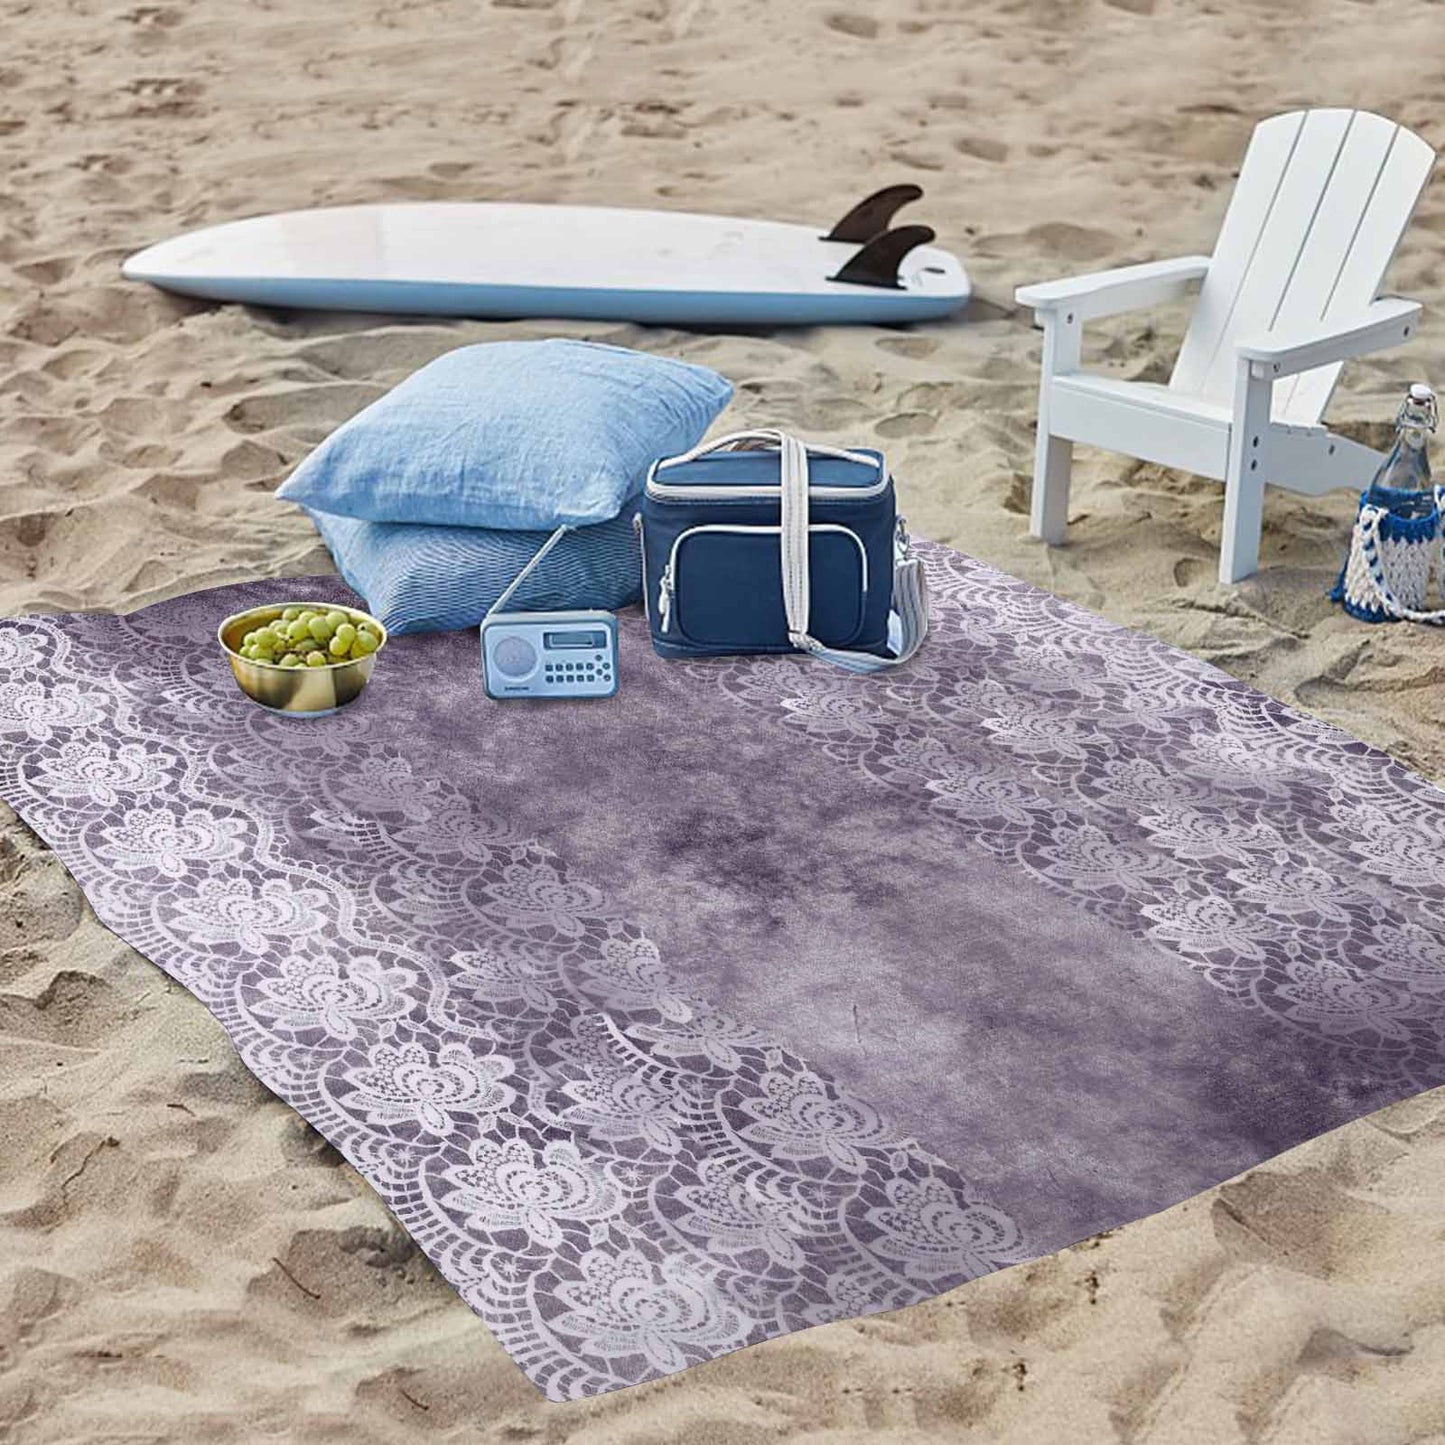 Victorian lace print waterproof picnic mat, 69 x 55in, design 39